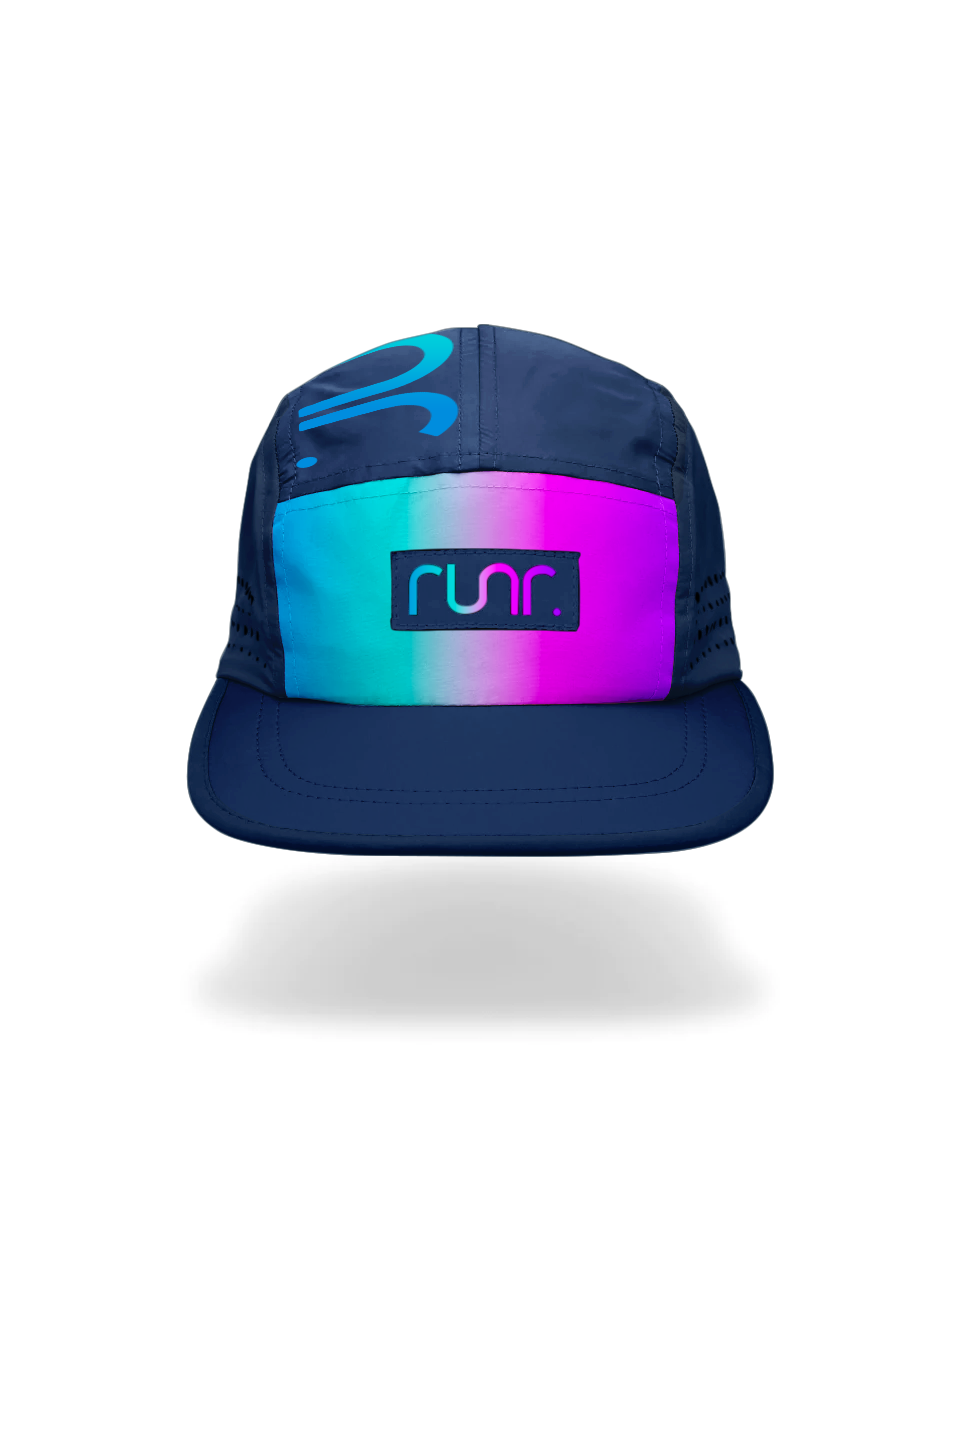 Runr Los Angeles Technical Running Hat